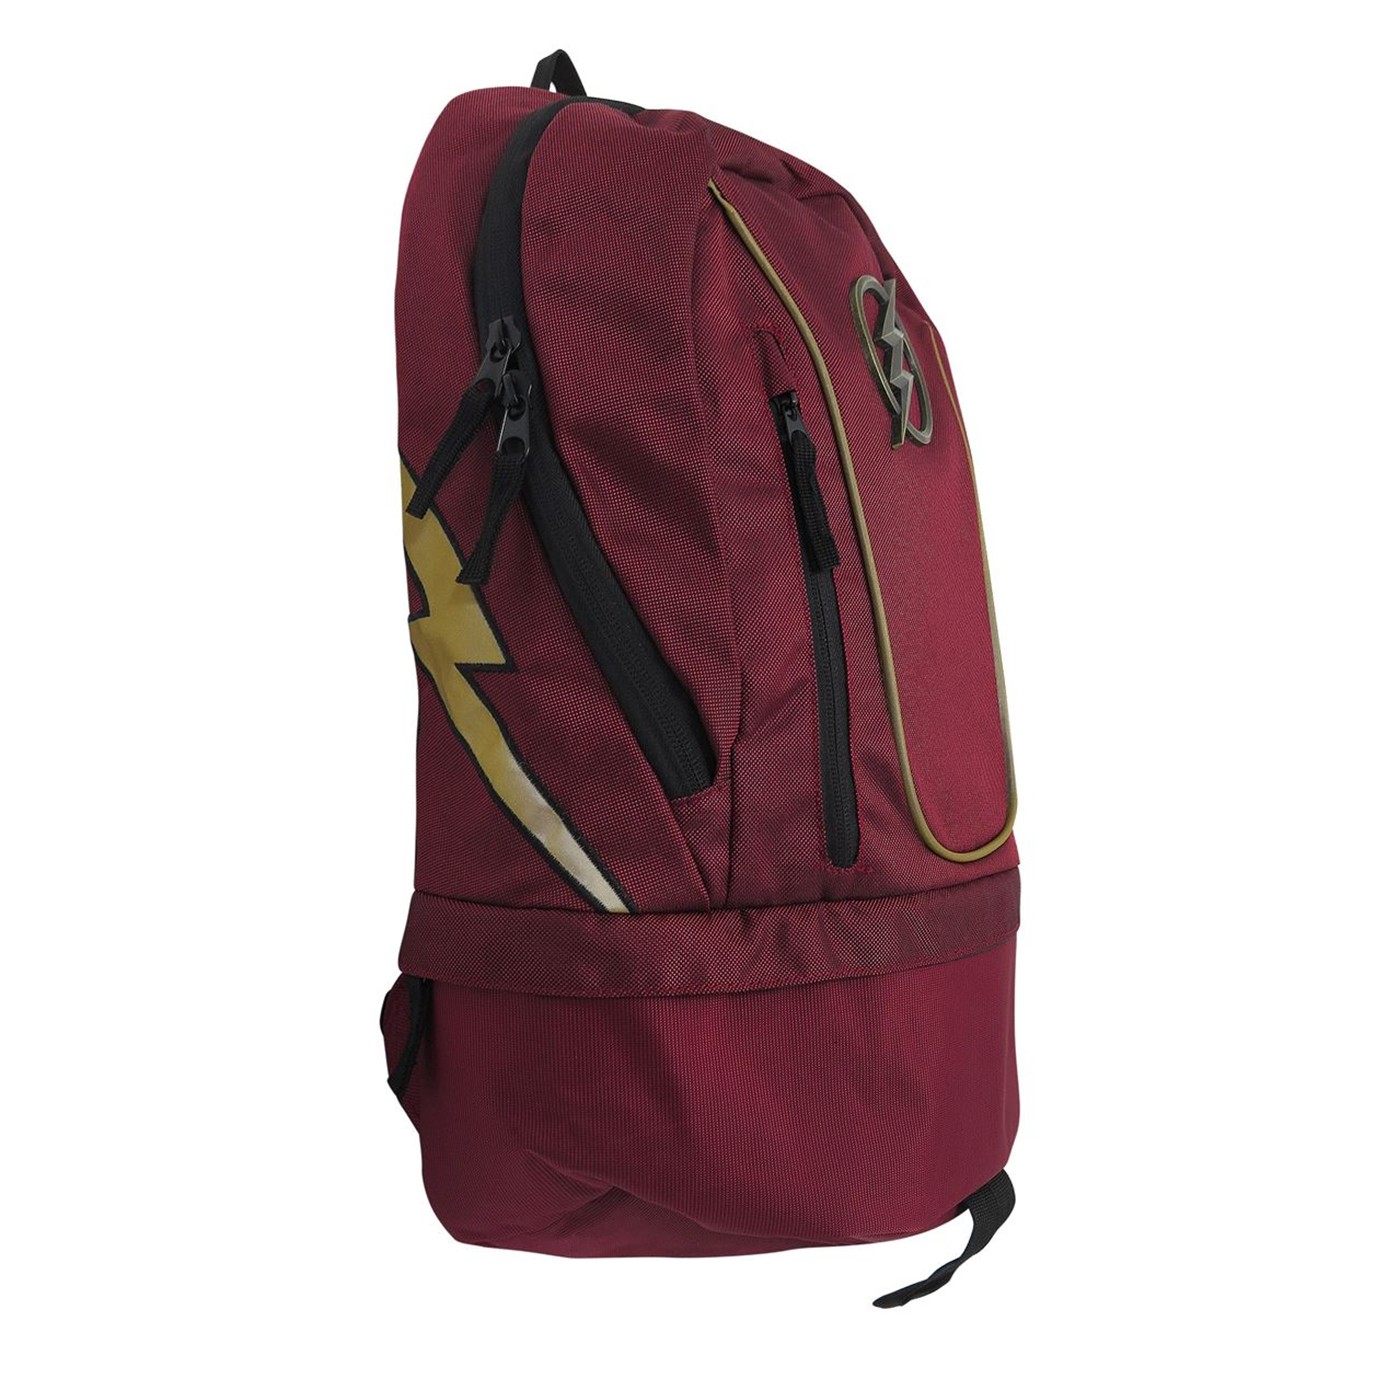 The Flash Better Built Backpack